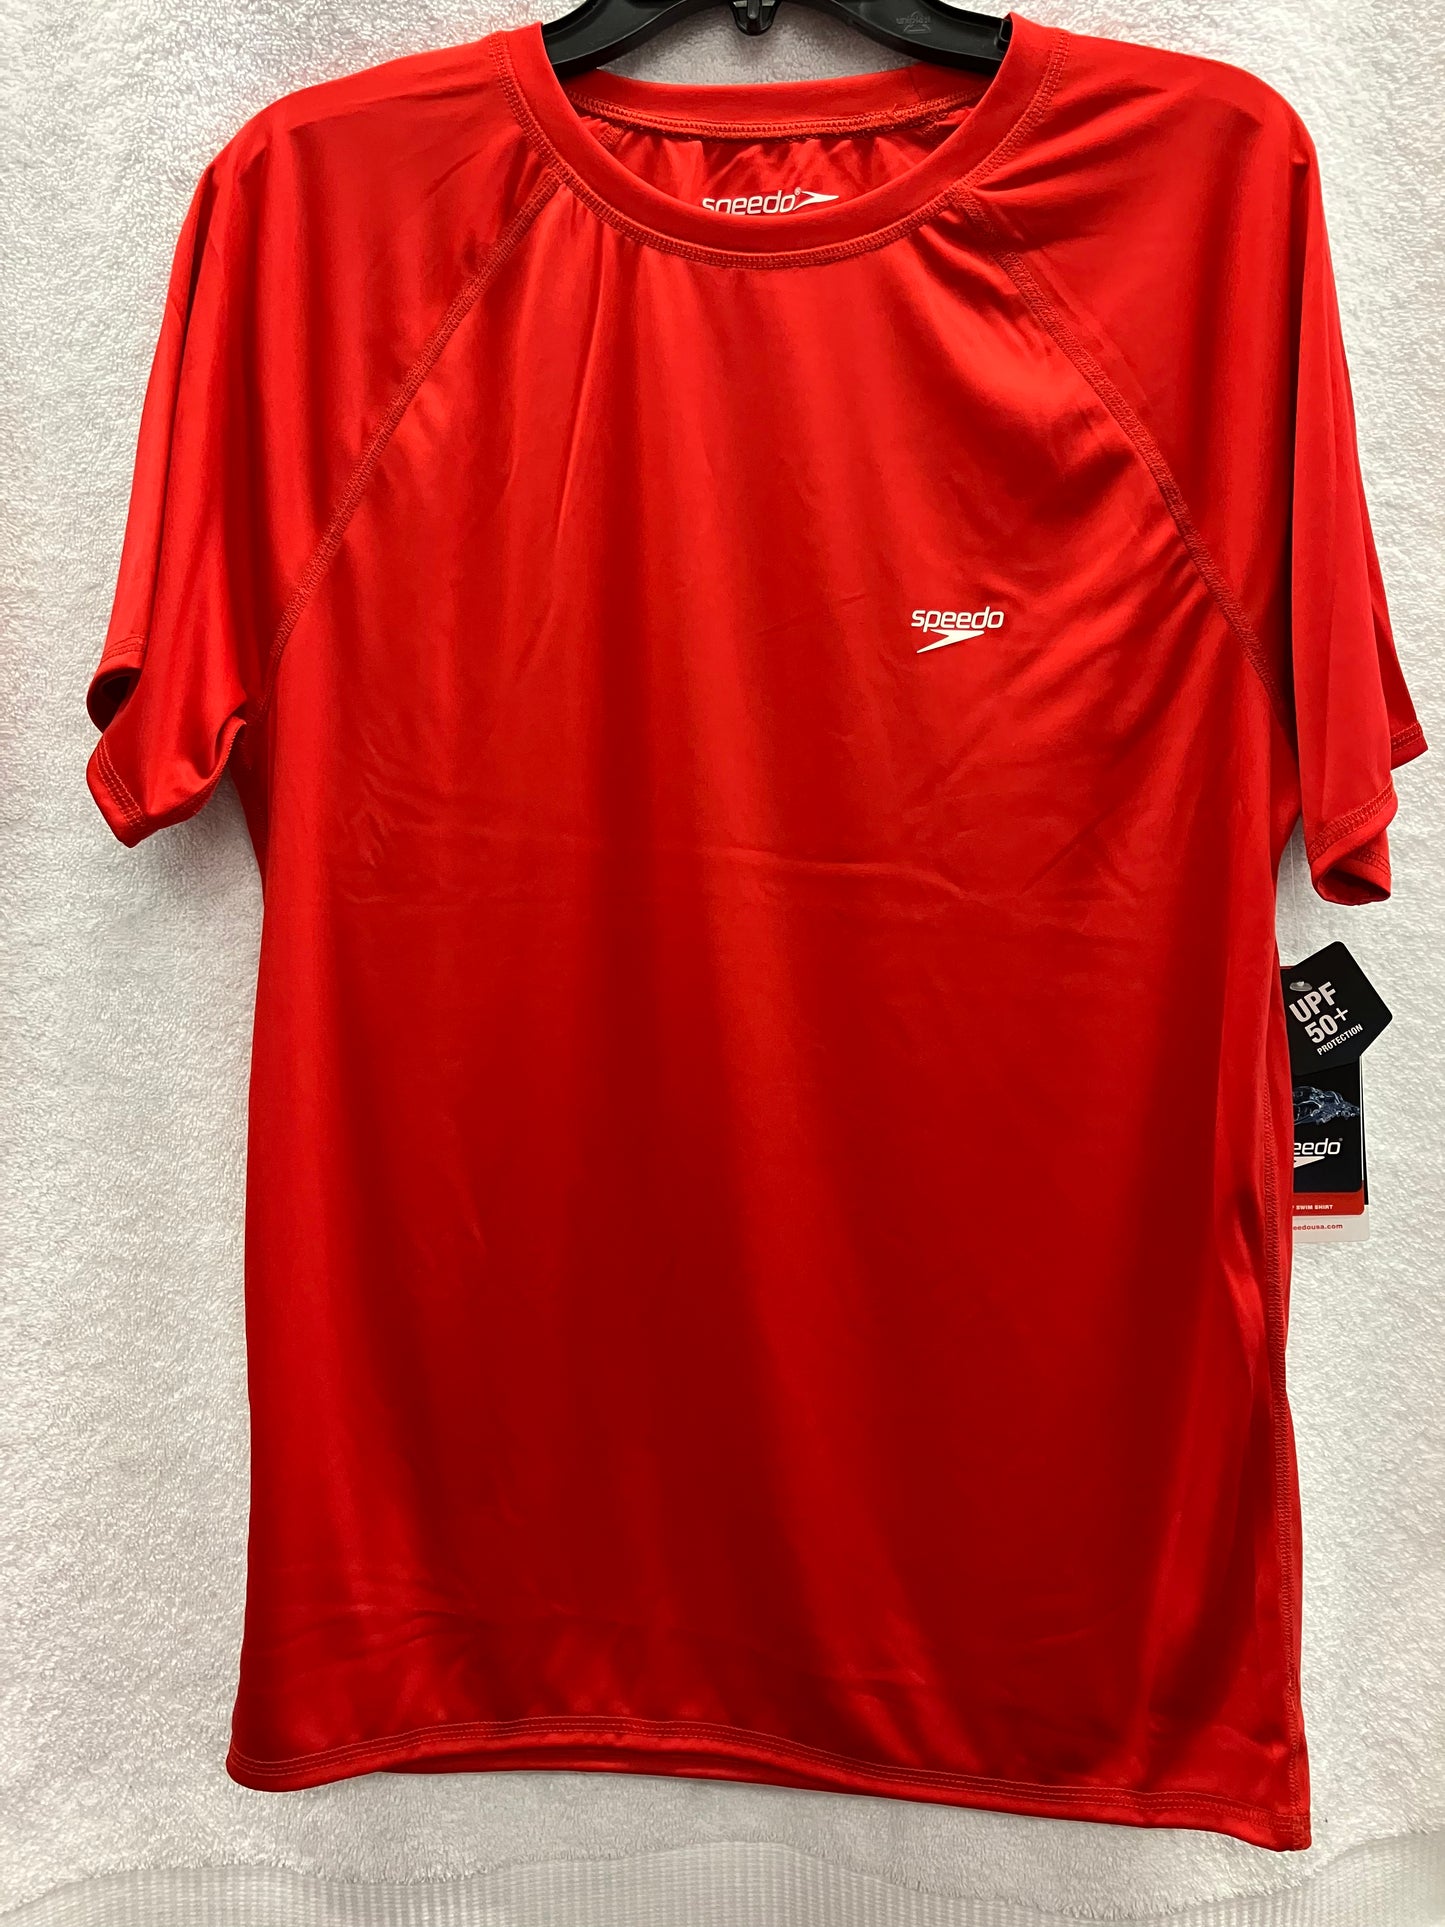 Speedo Red Easy Swim Shirt Size XLarge